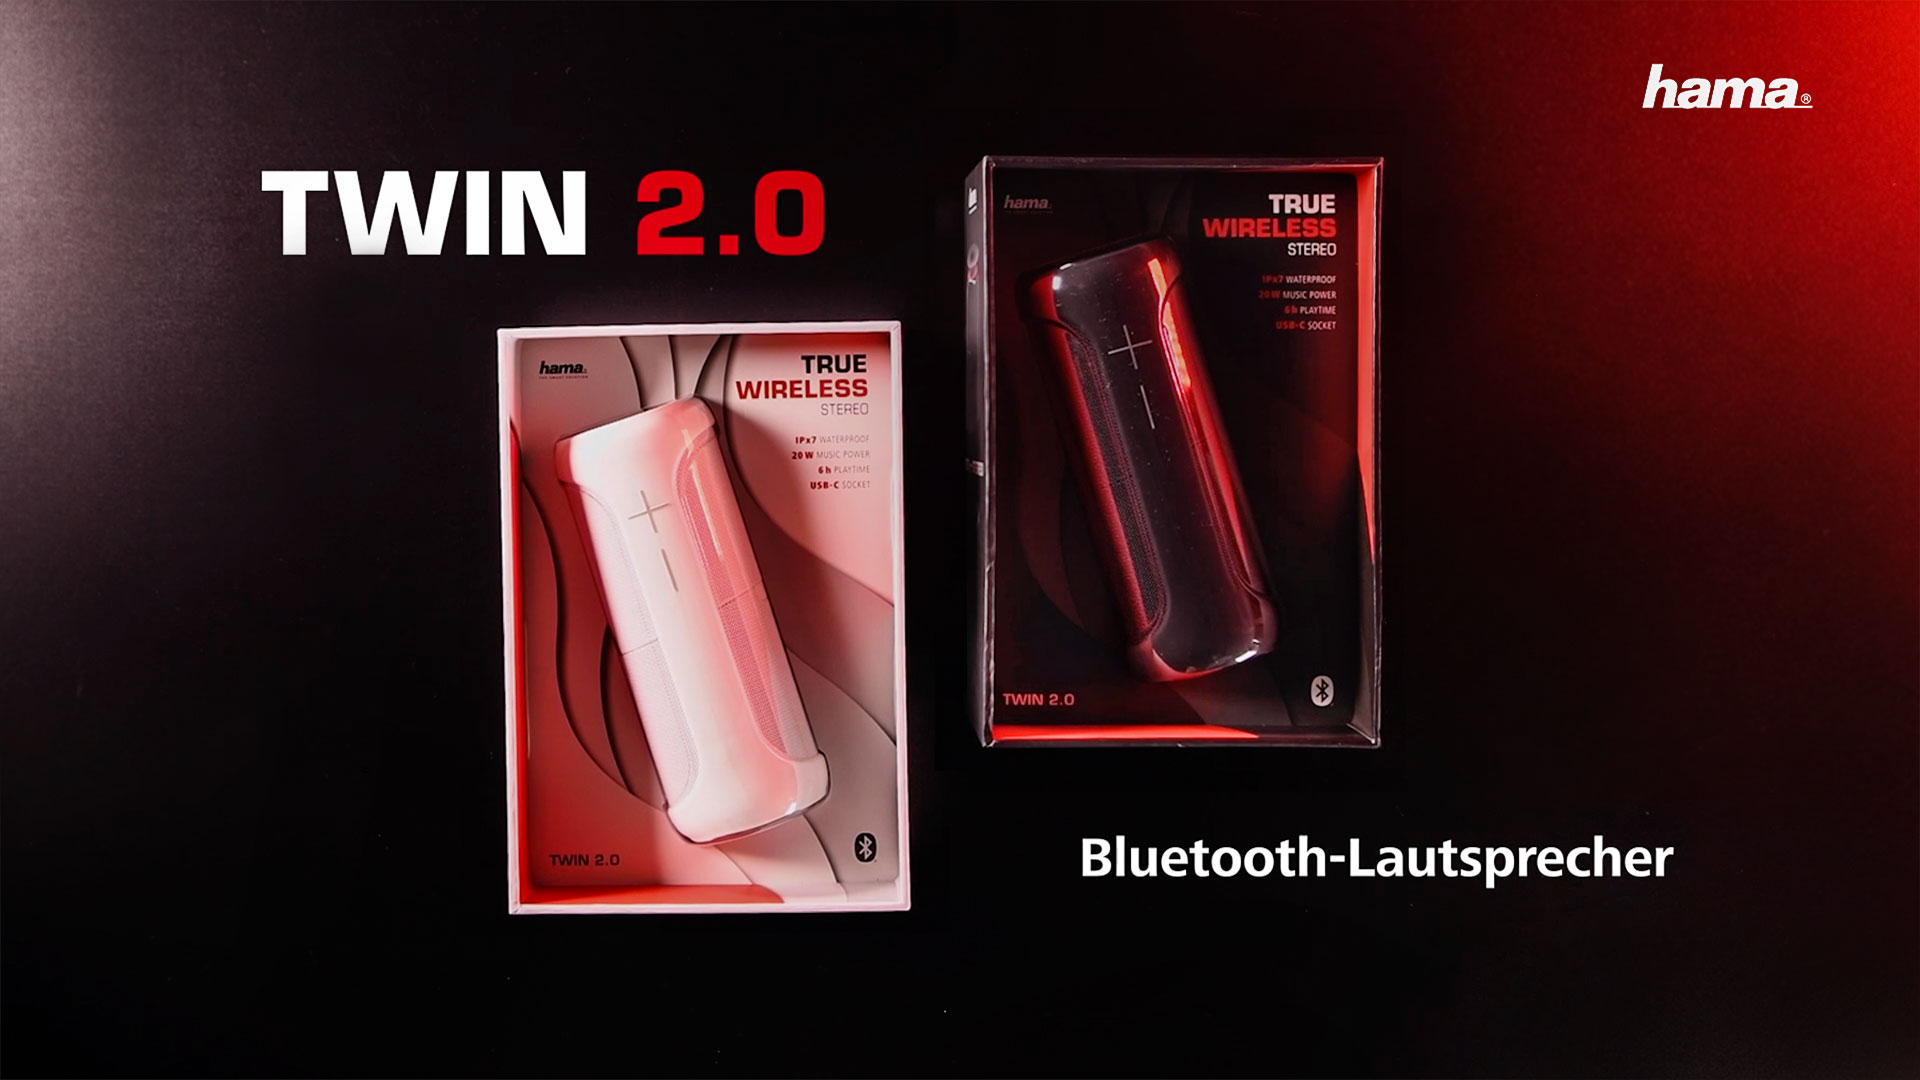 Hama Bluetooth®-Lautsprecher "Twin 2.0" | Unboxing